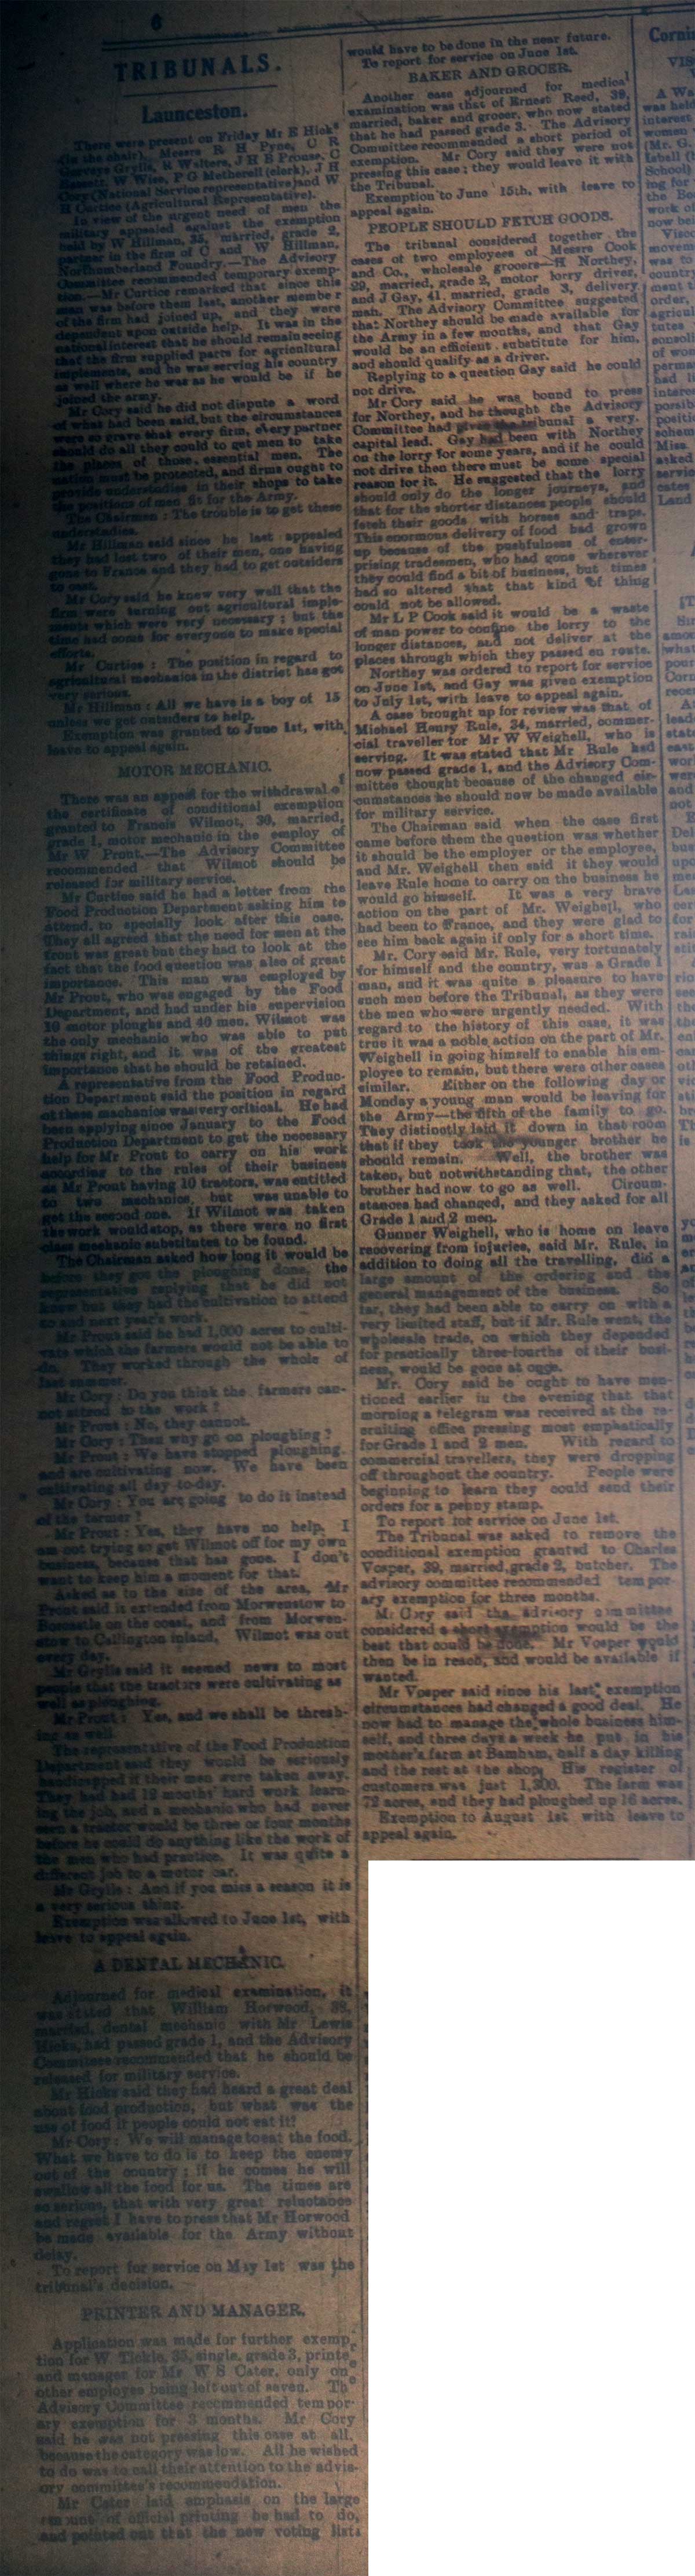 Launceston Tribunal, April 20th, 1918